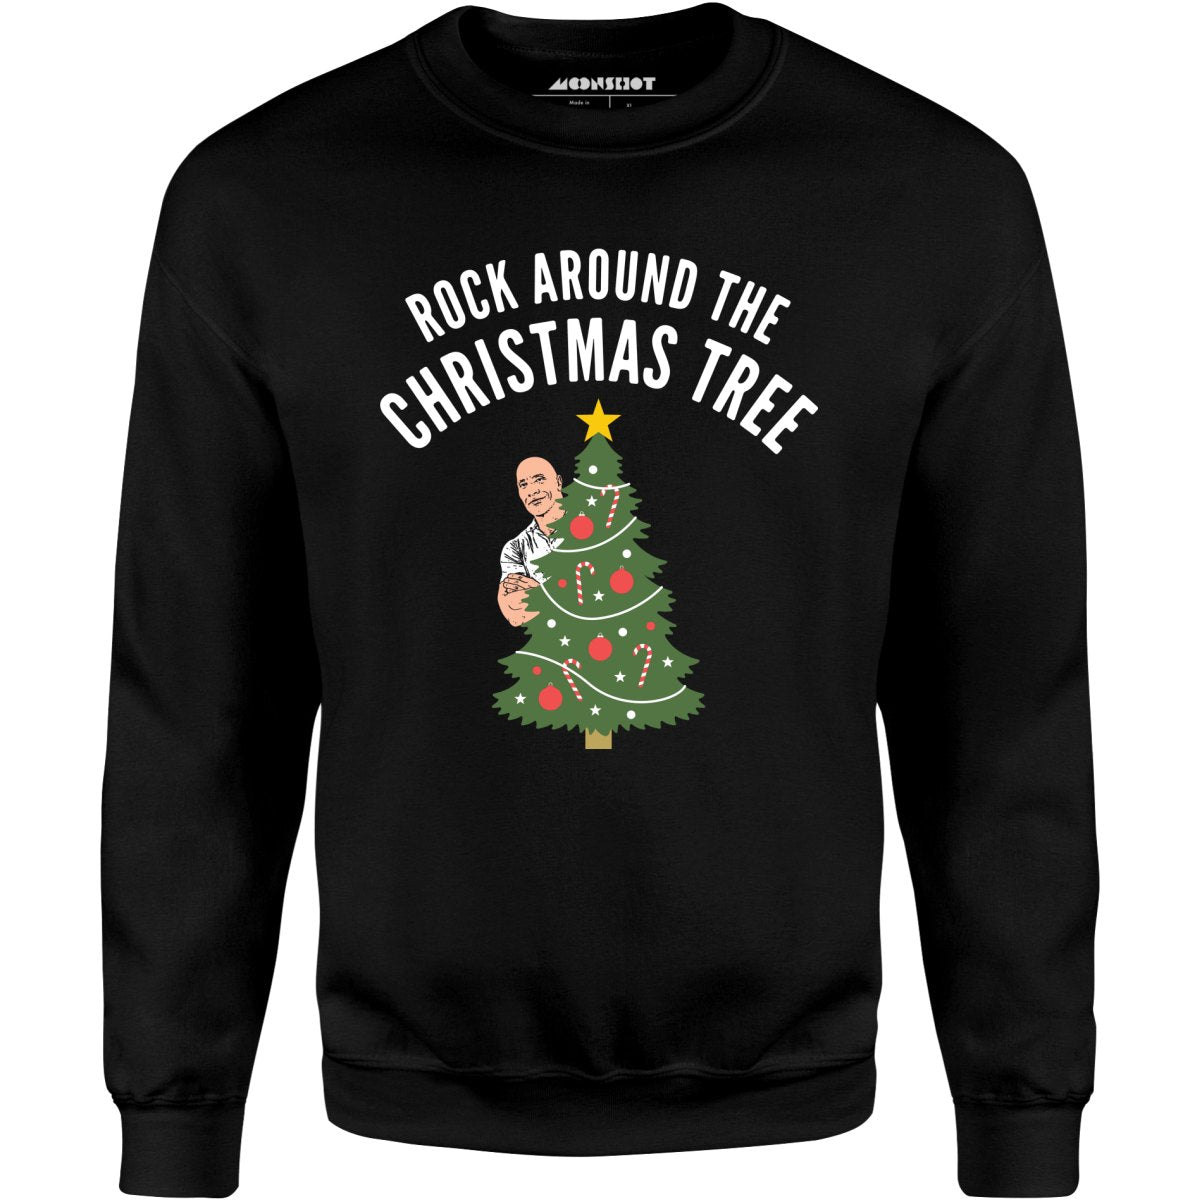 Rock Around the Christmas Tree - Unisex Sweatshirt